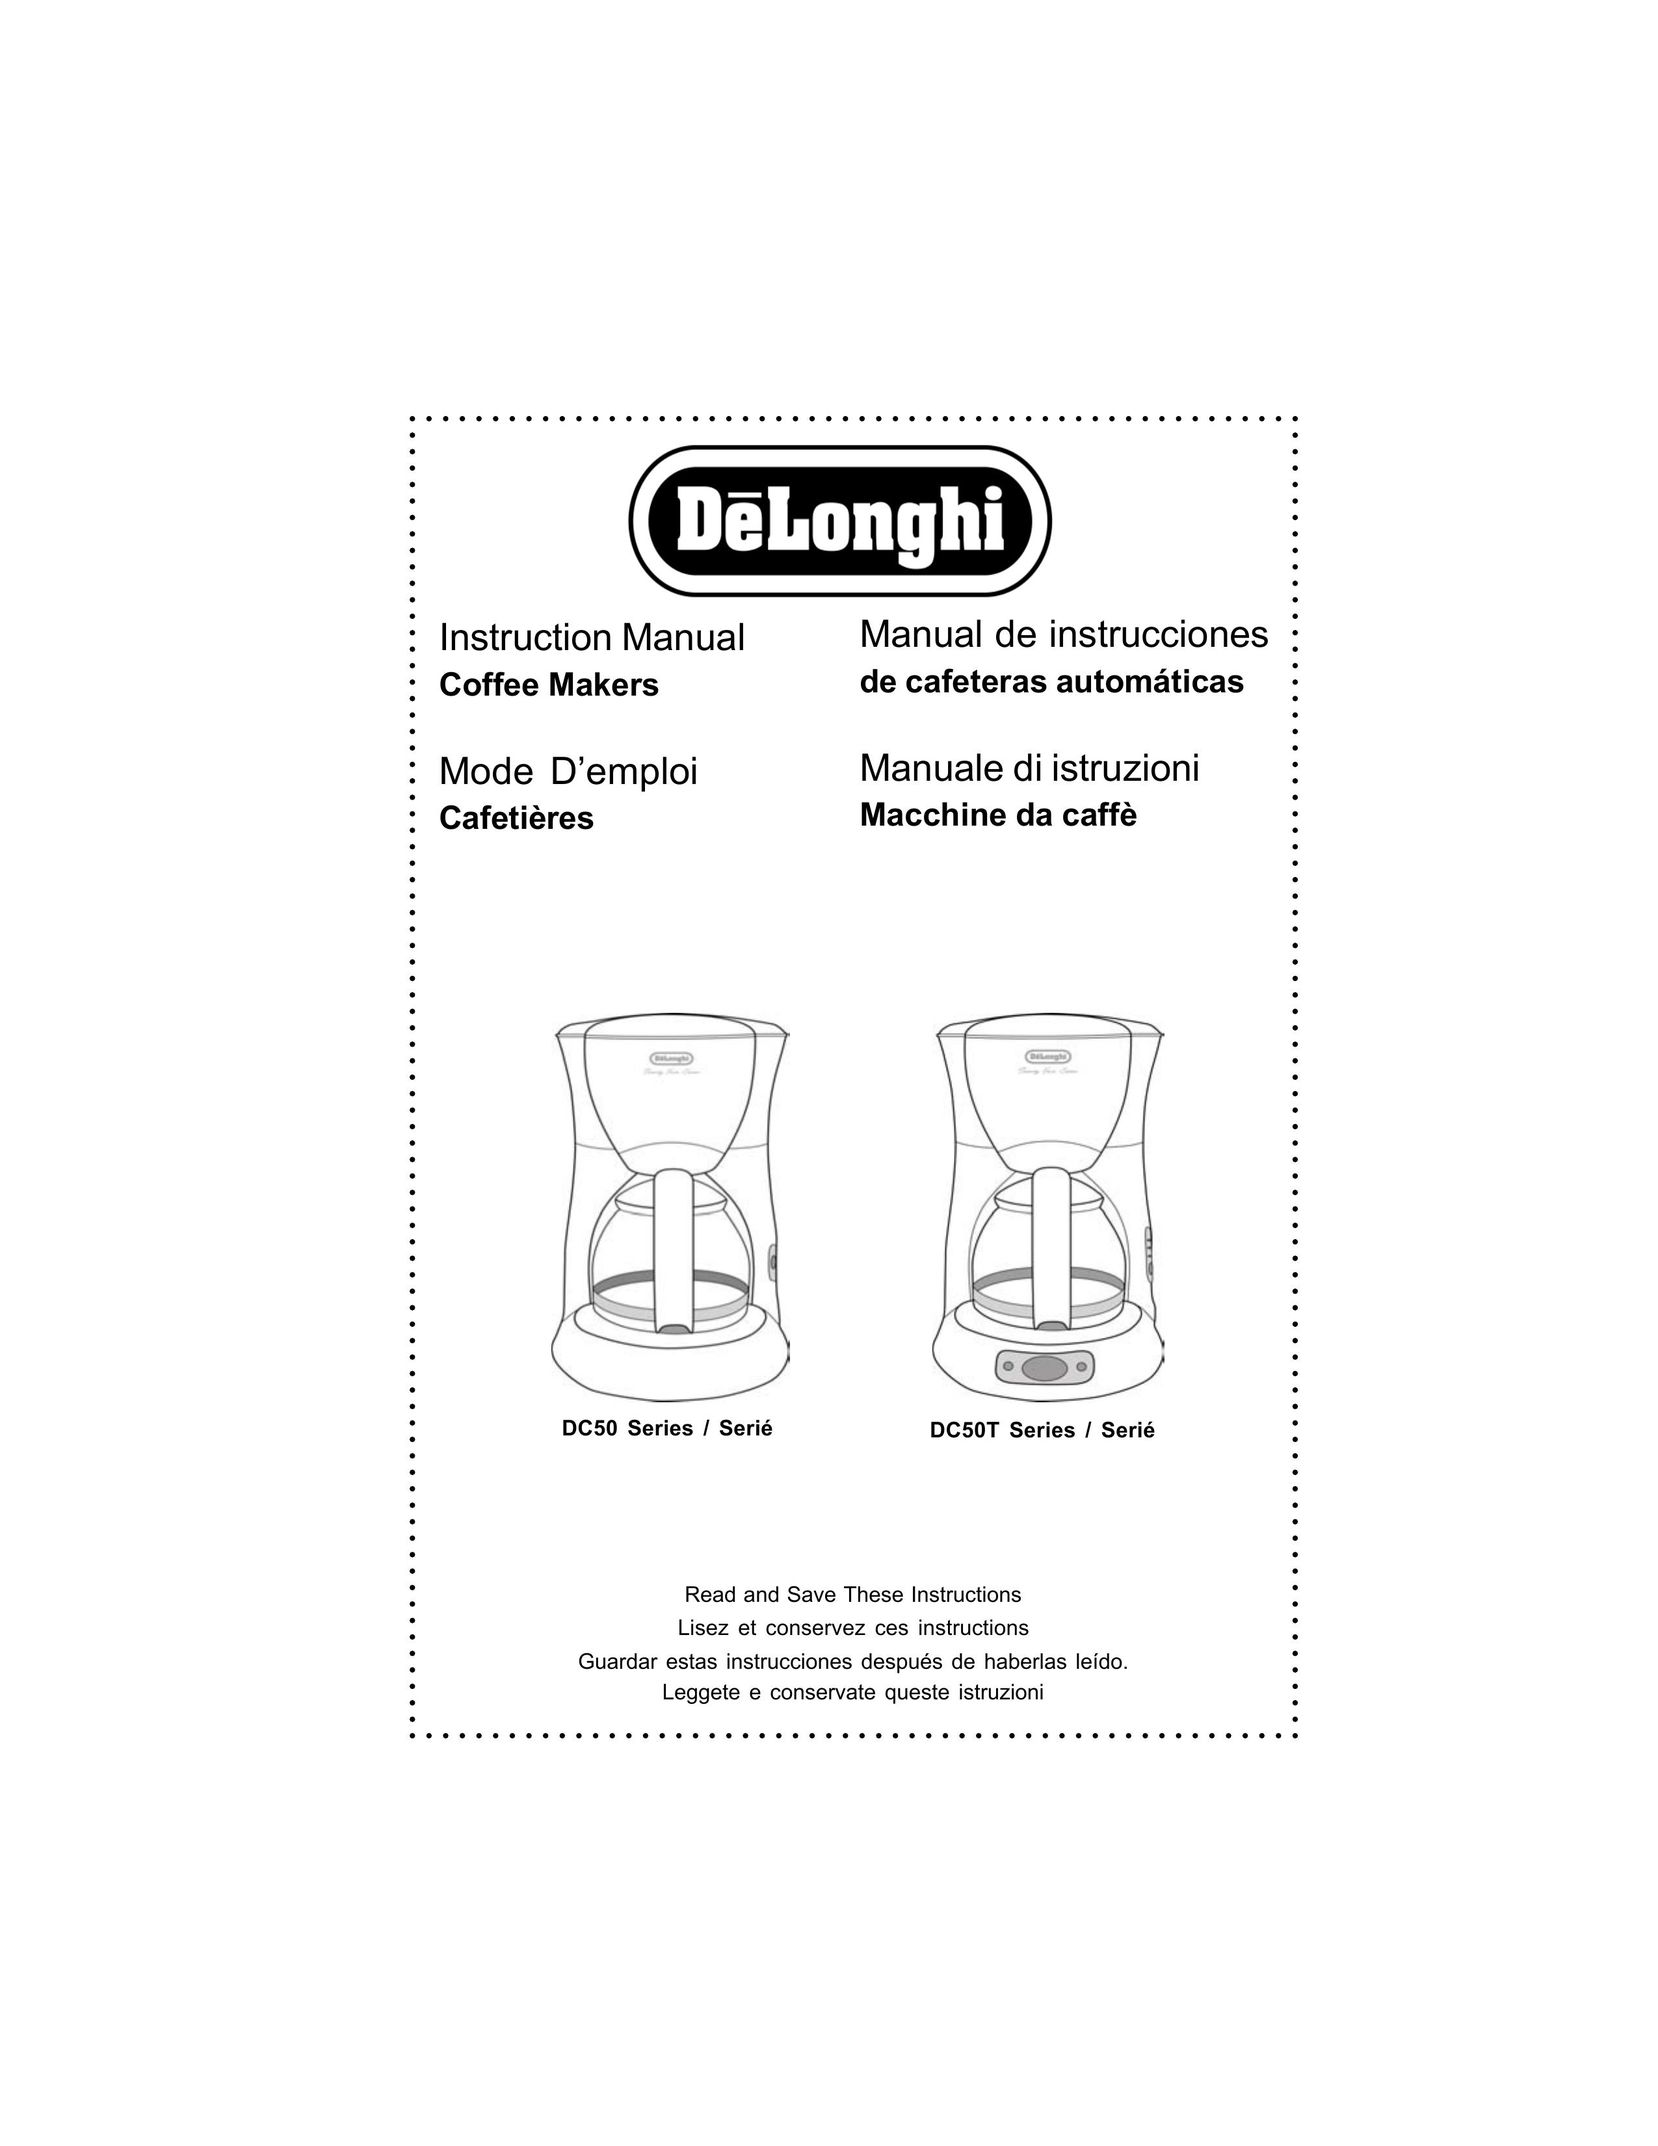 DeLonghi DC50T Coffeemaker User Manual